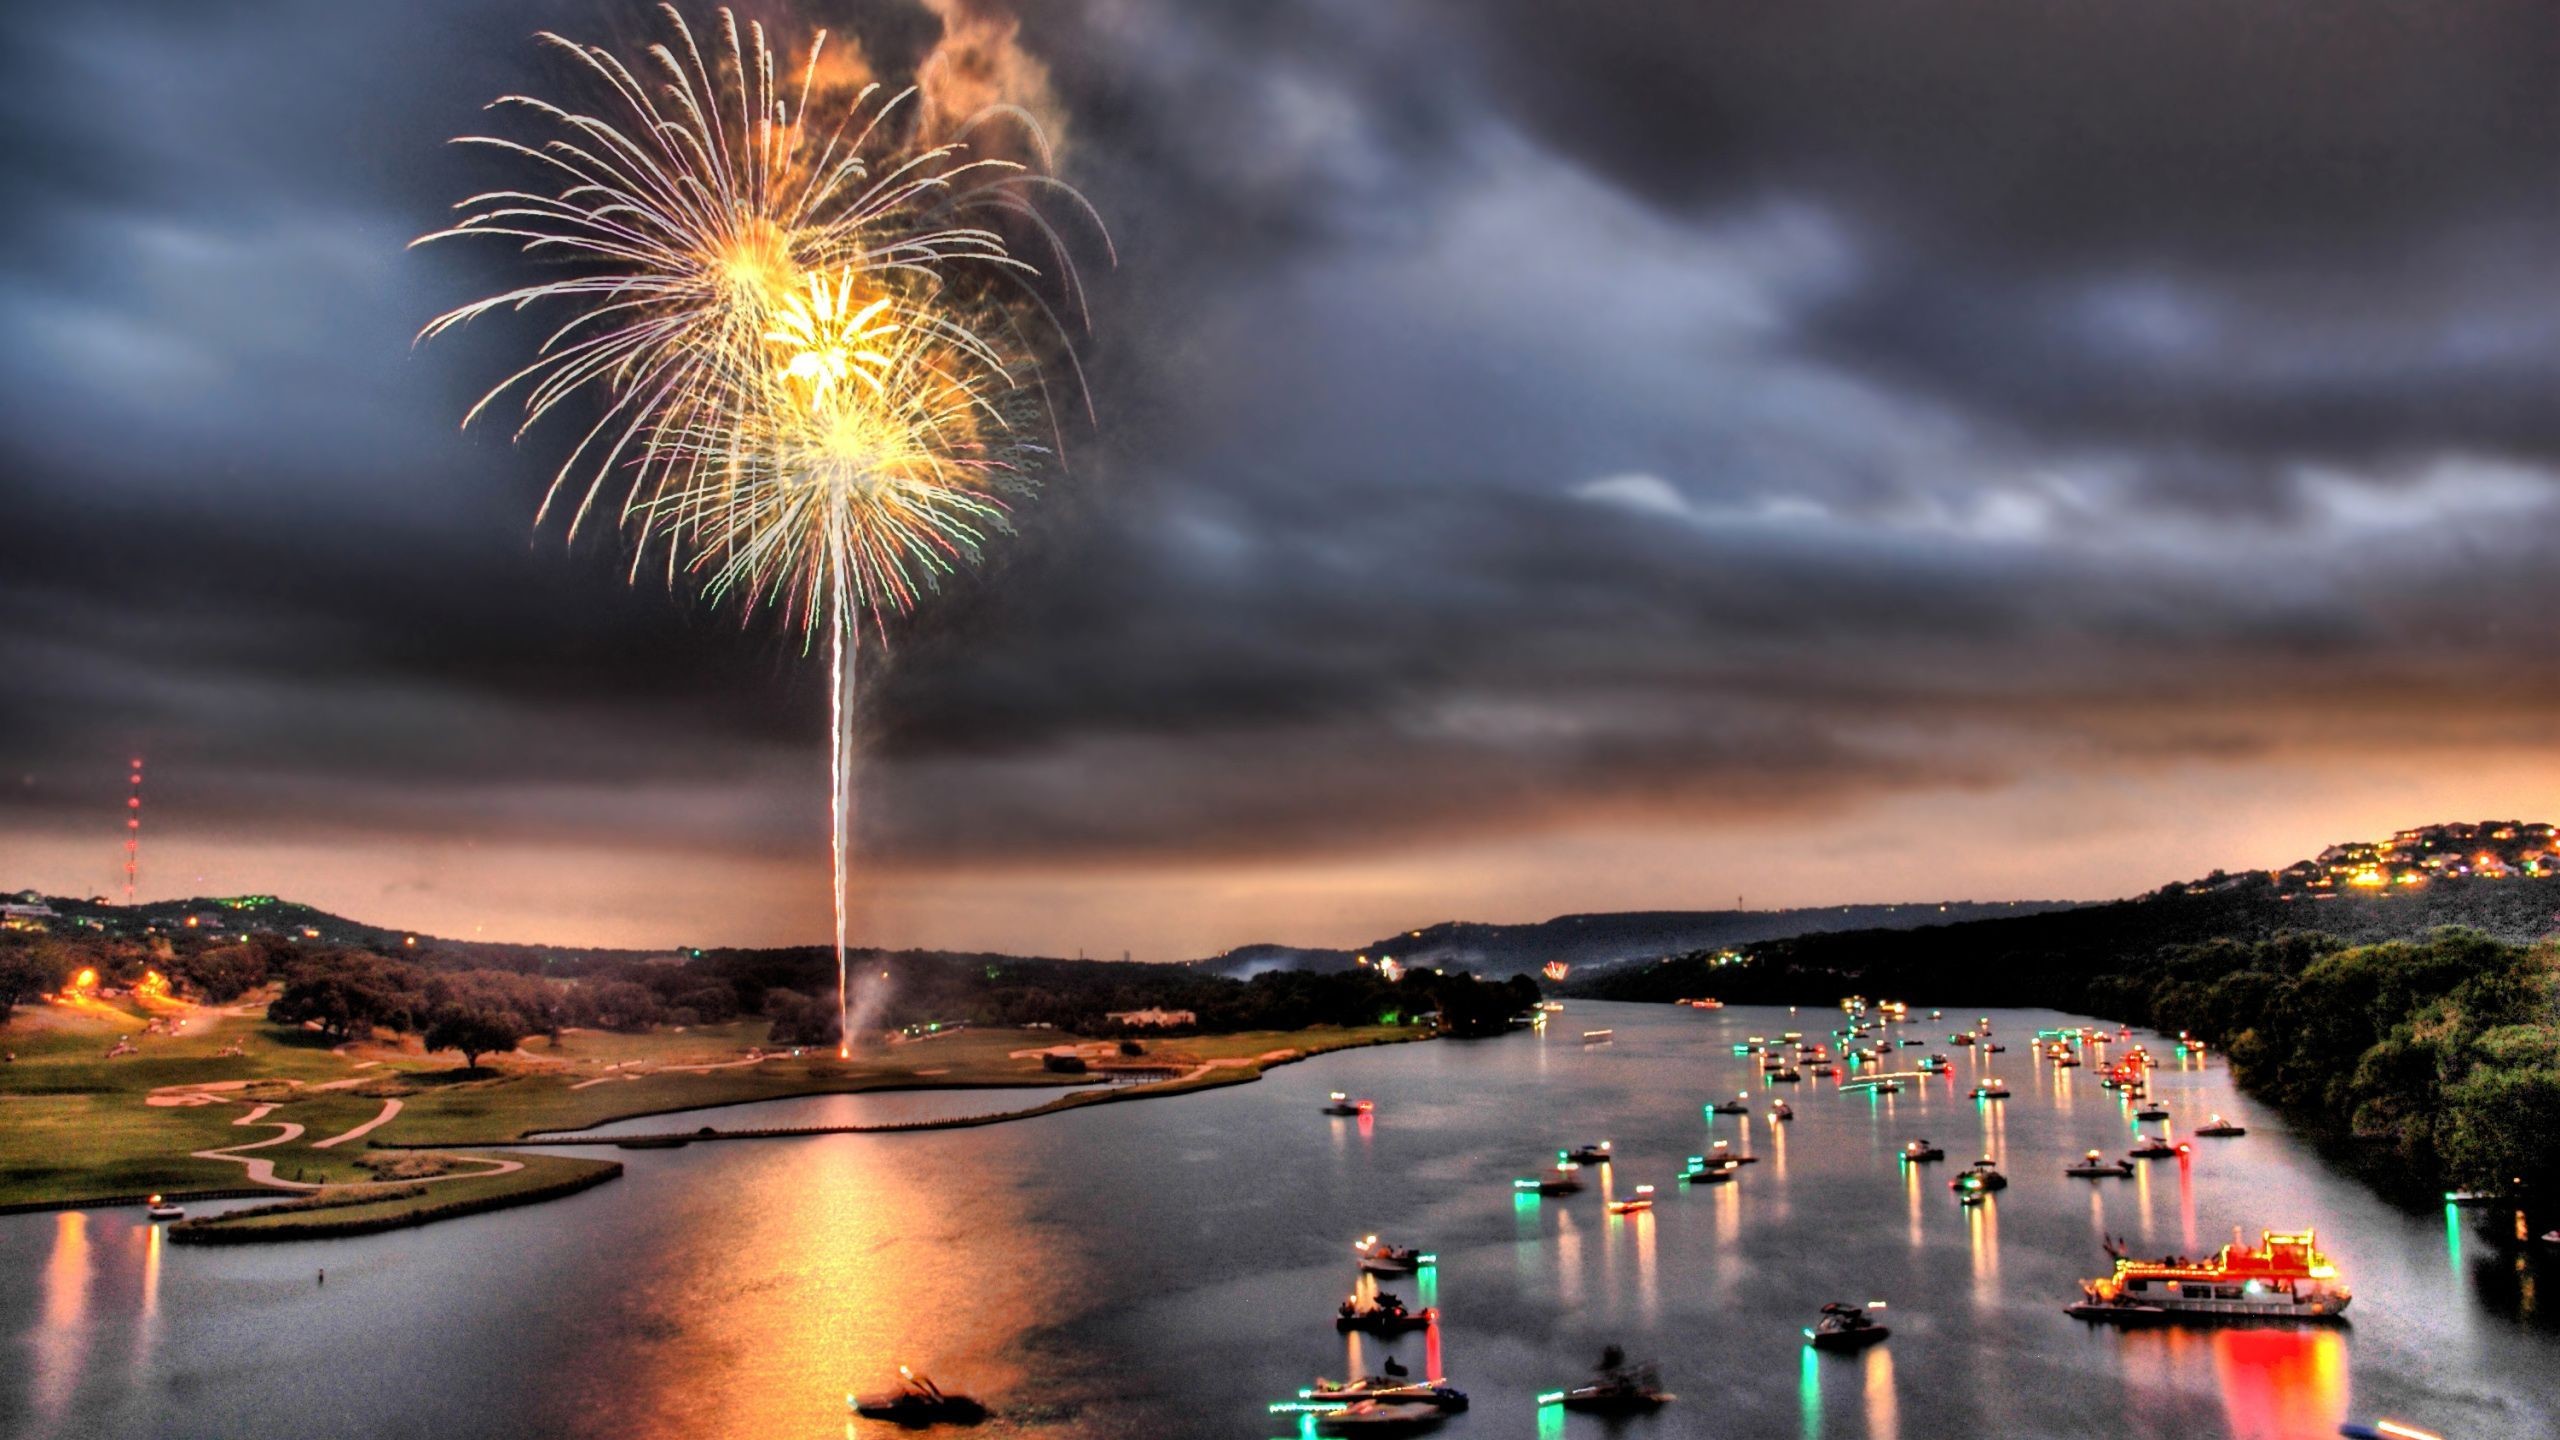 2560x1440 ... 4 fireworks over lake Austin, Texas HD Wallpaper  July ...